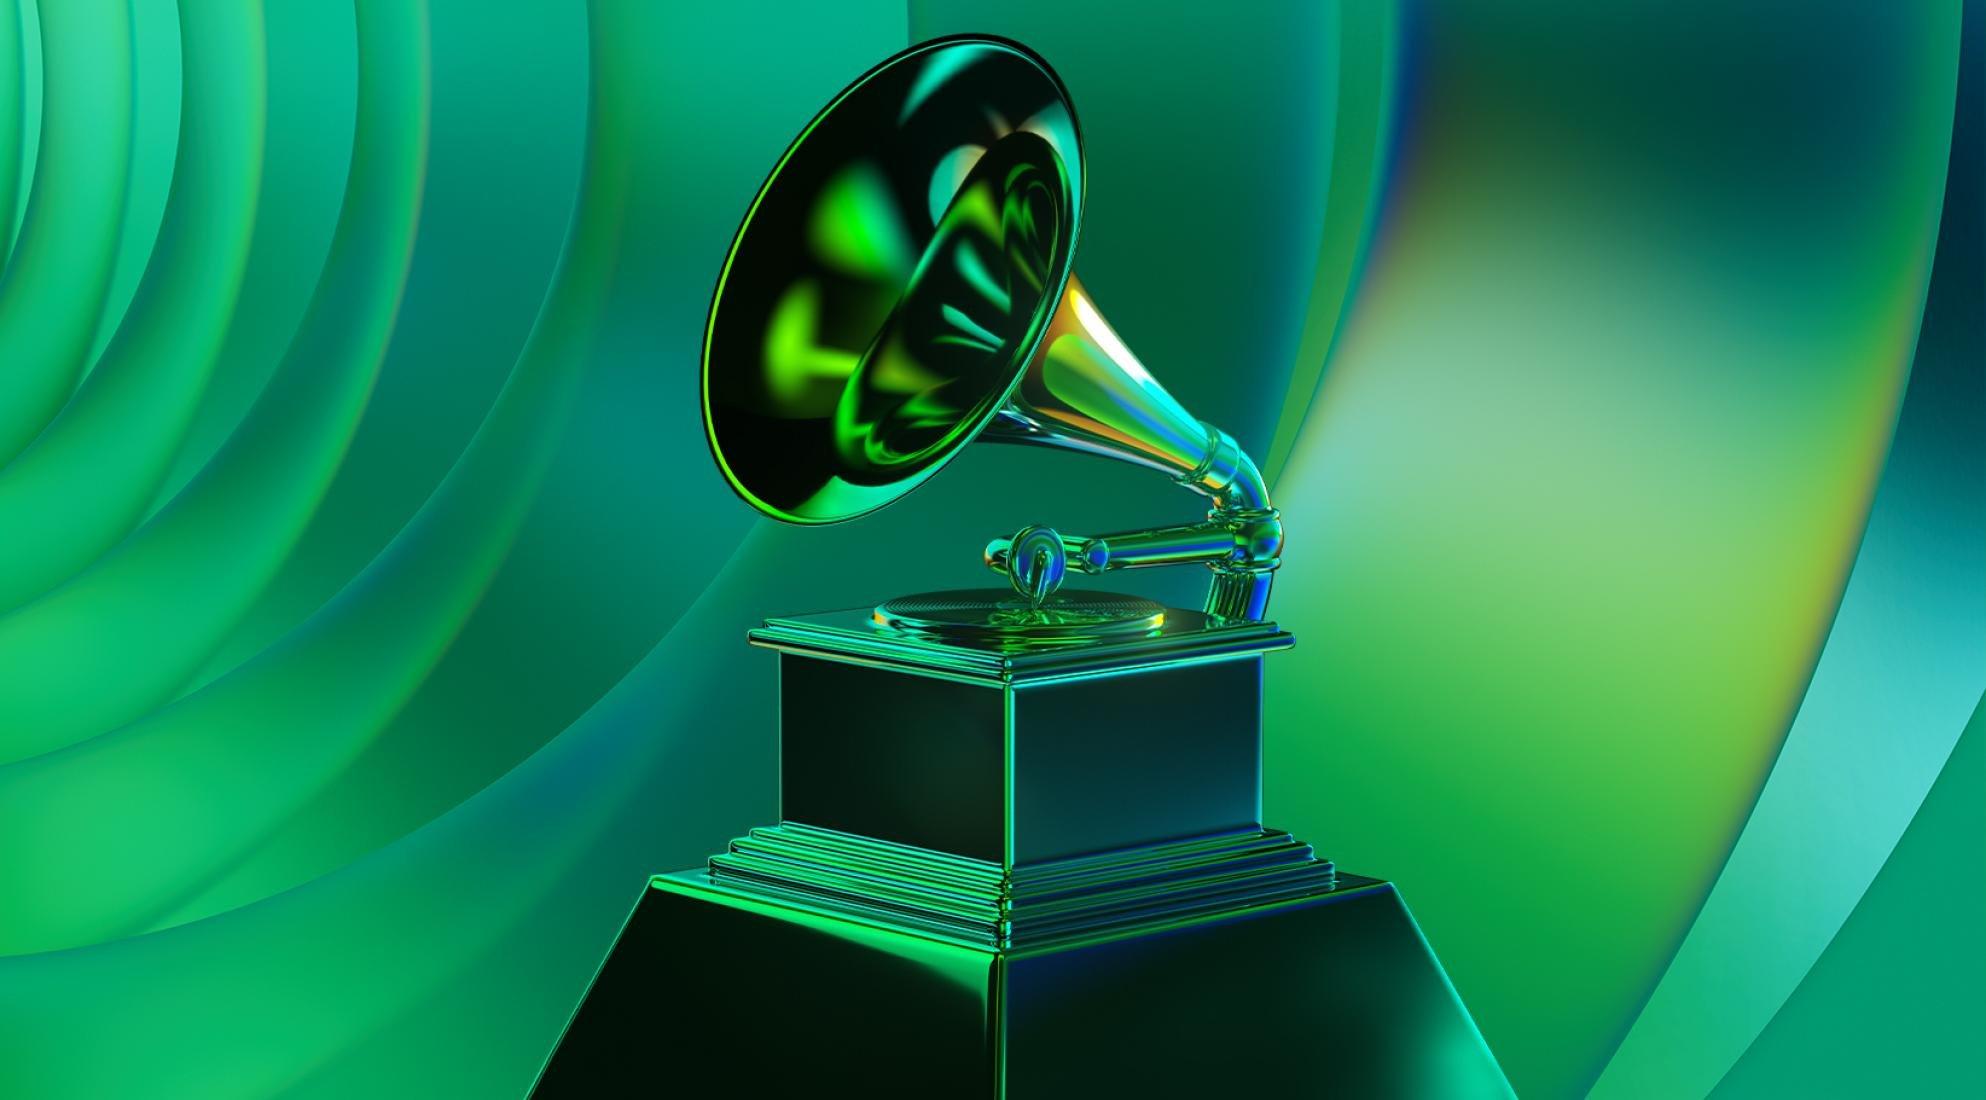 Latin Grammy Awards 2022